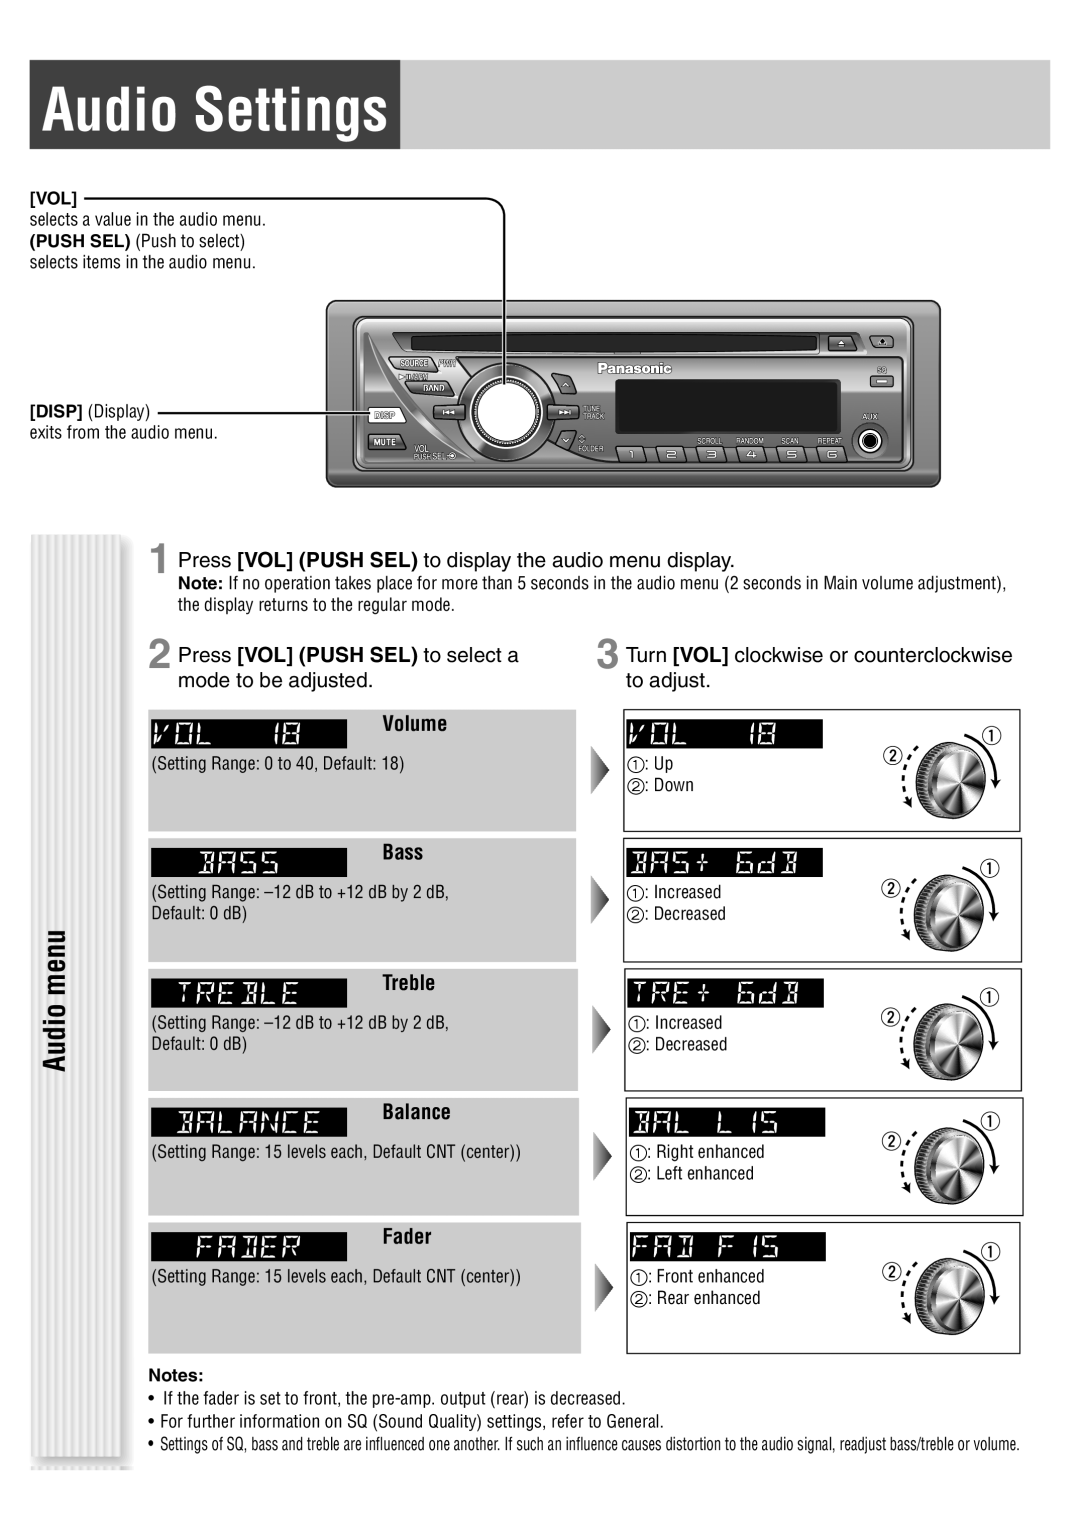 Panasonic C1335L Audio Settings, Audio menu, Press VOL PUSH SEL to display the audio menu display, mode to be adjusted 